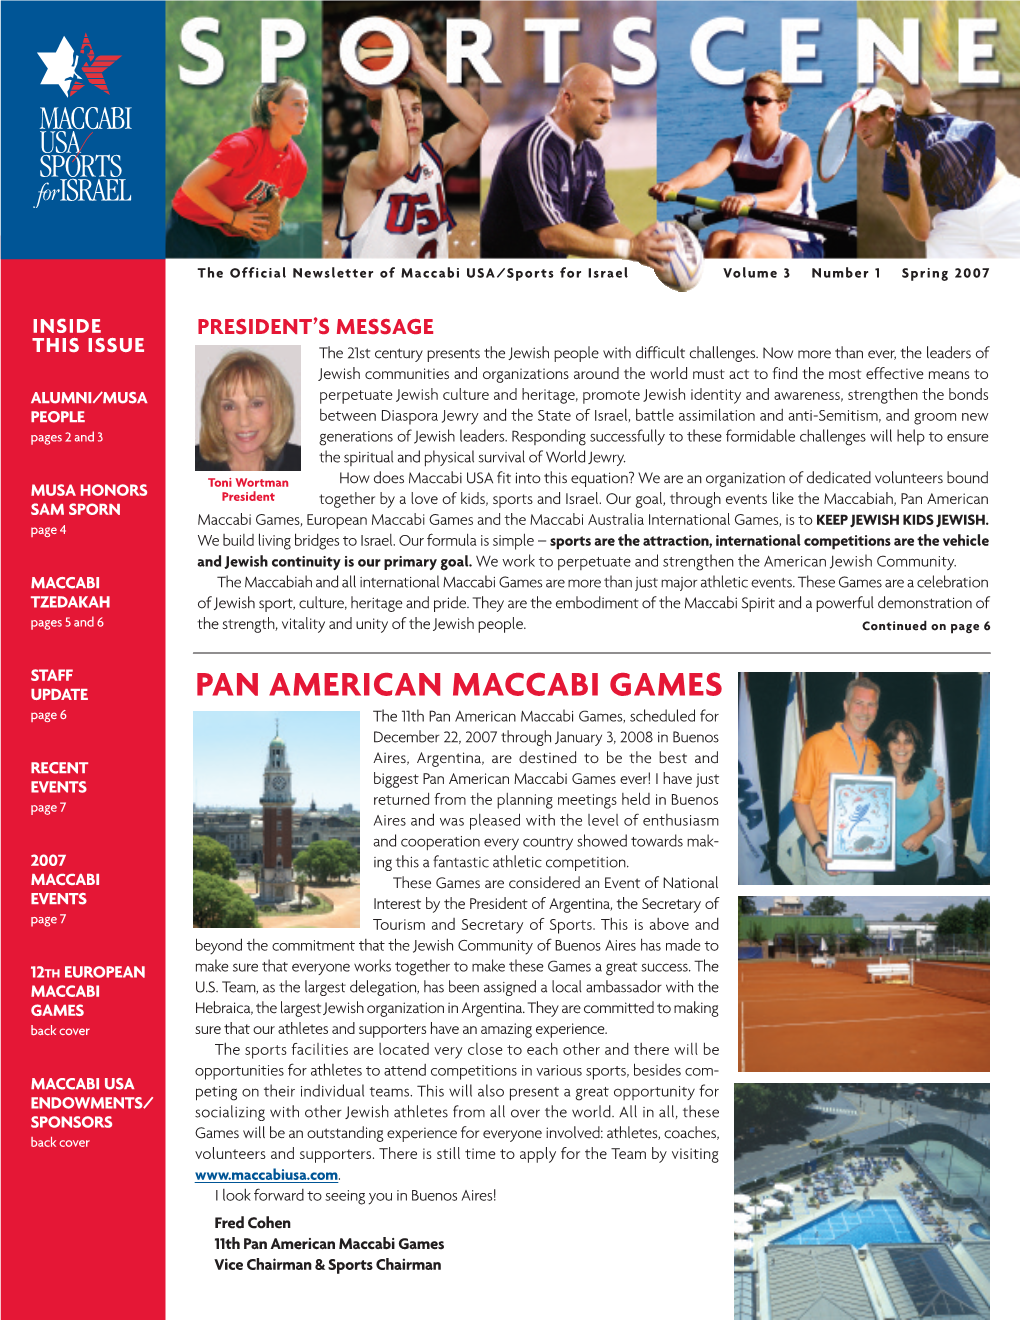 Pan American Maccabi Games